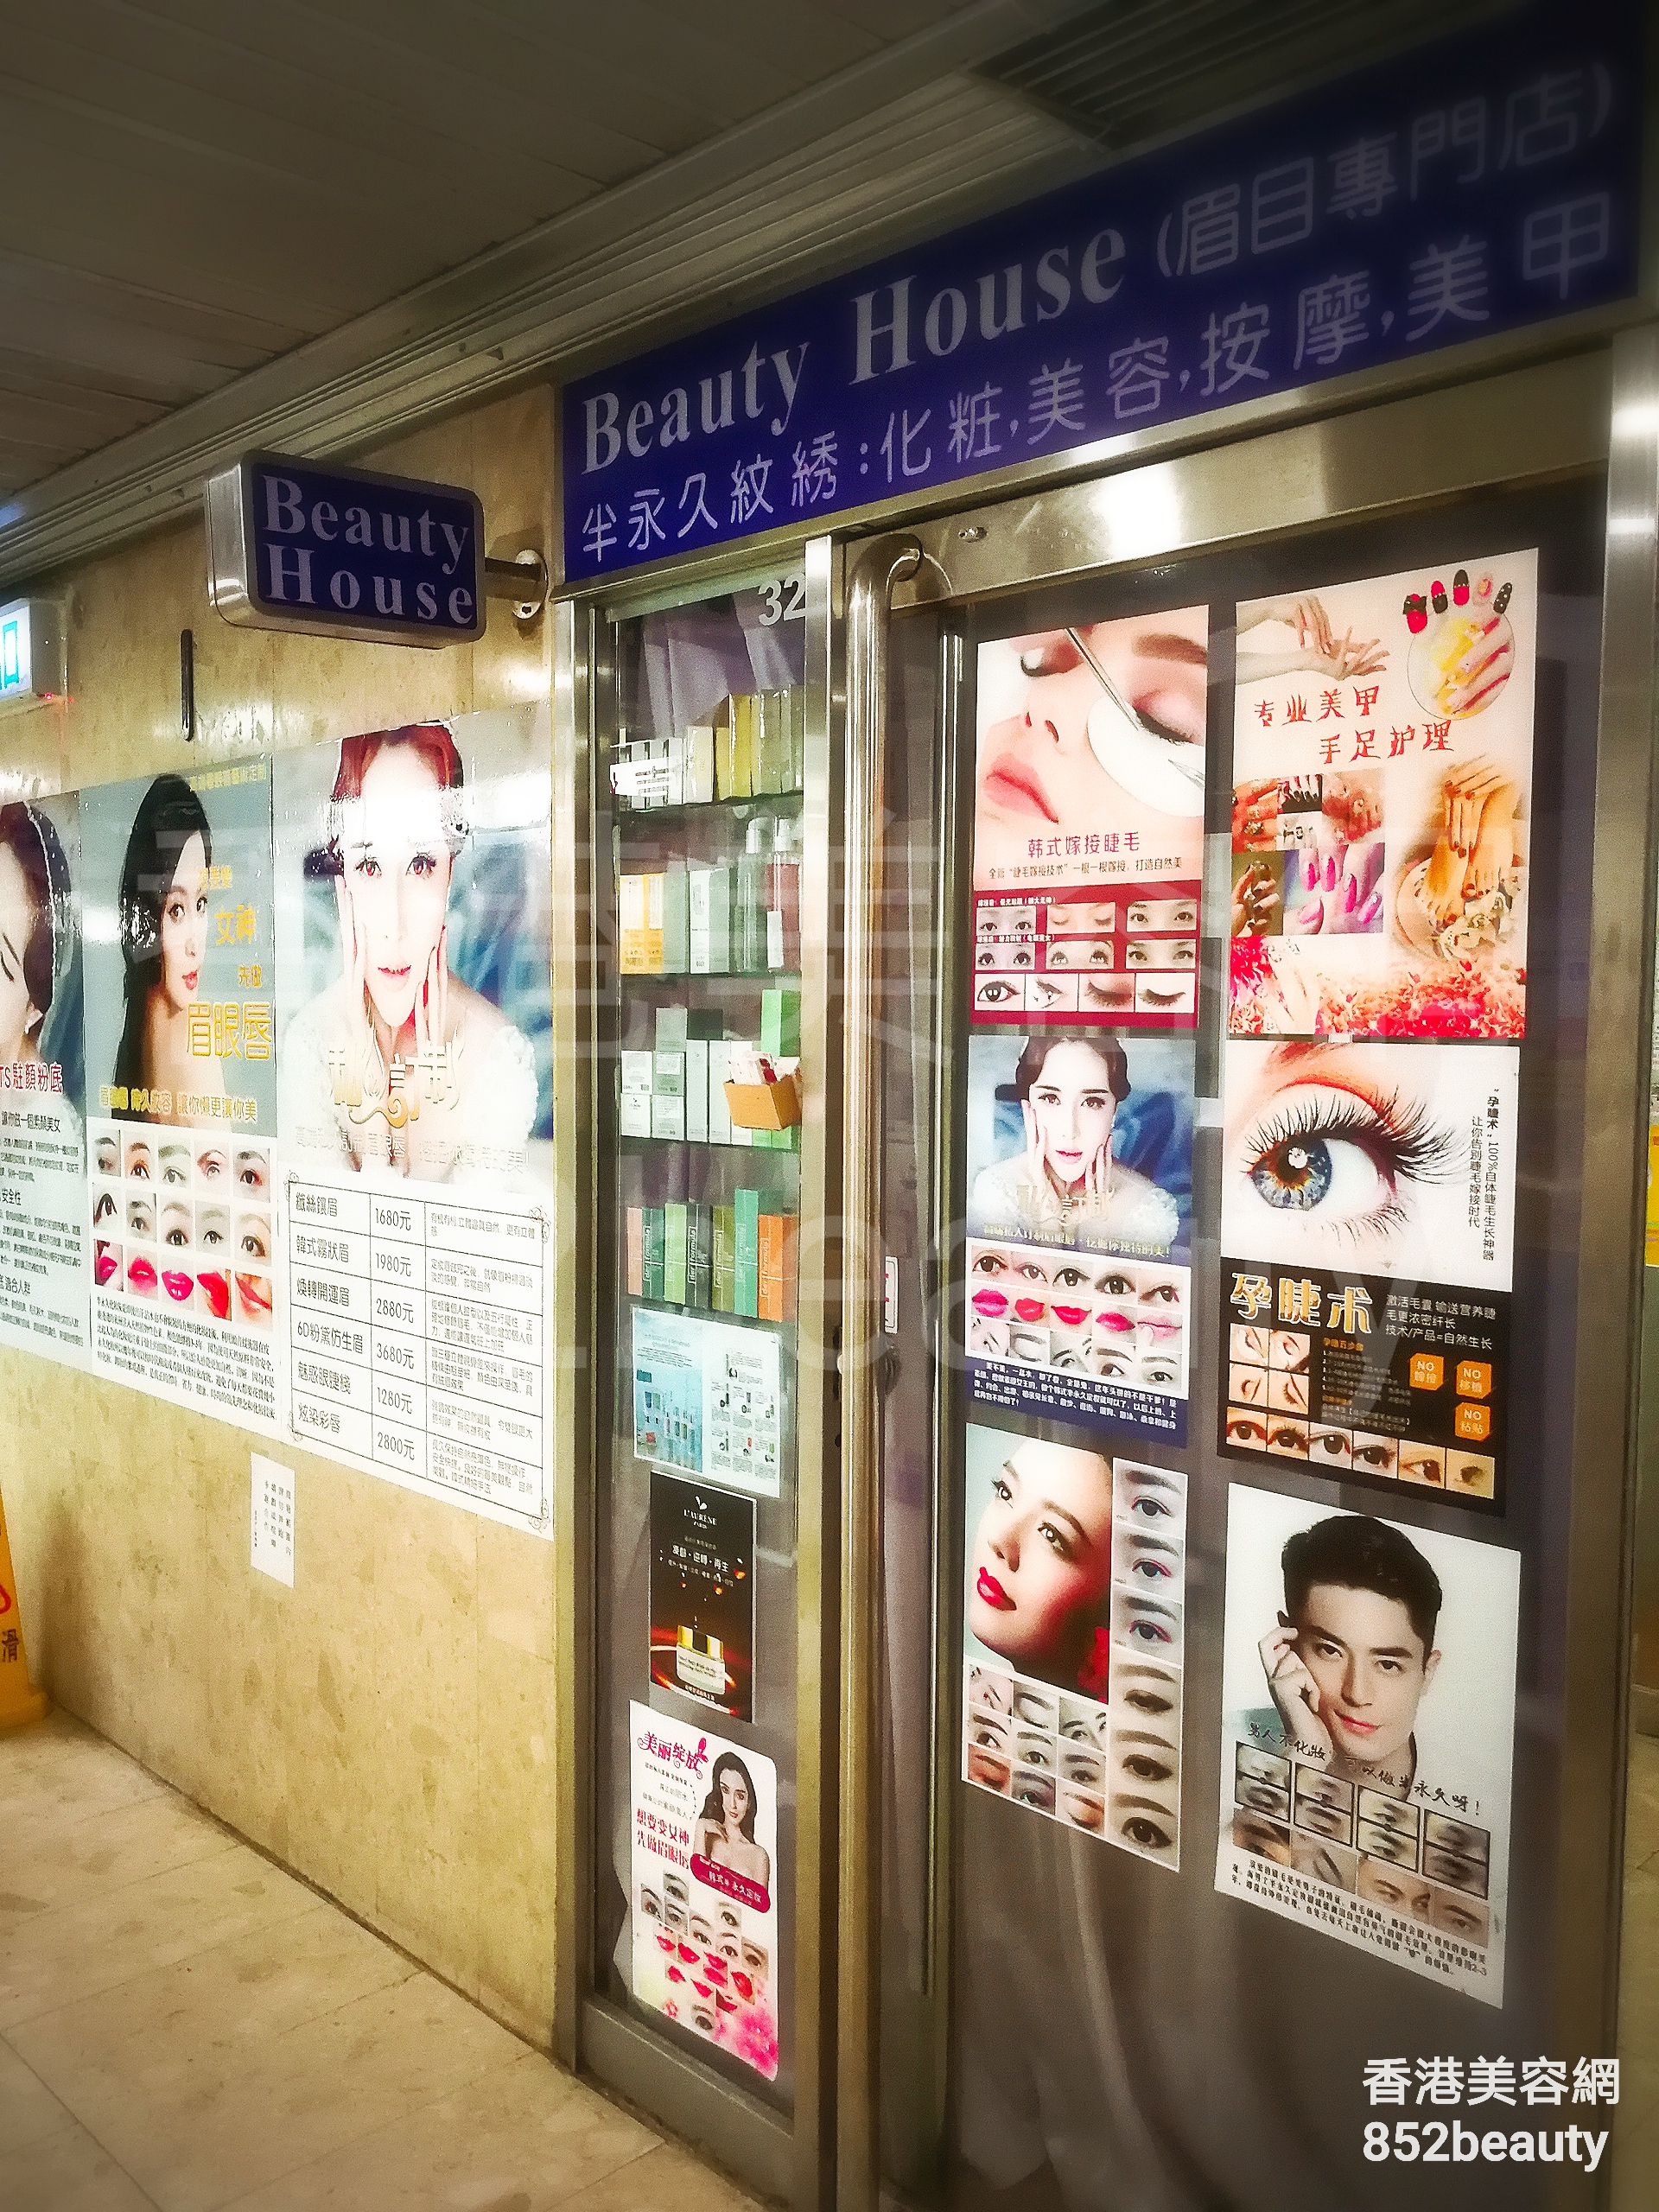 Manicure: Beauty house (眉目專門店)